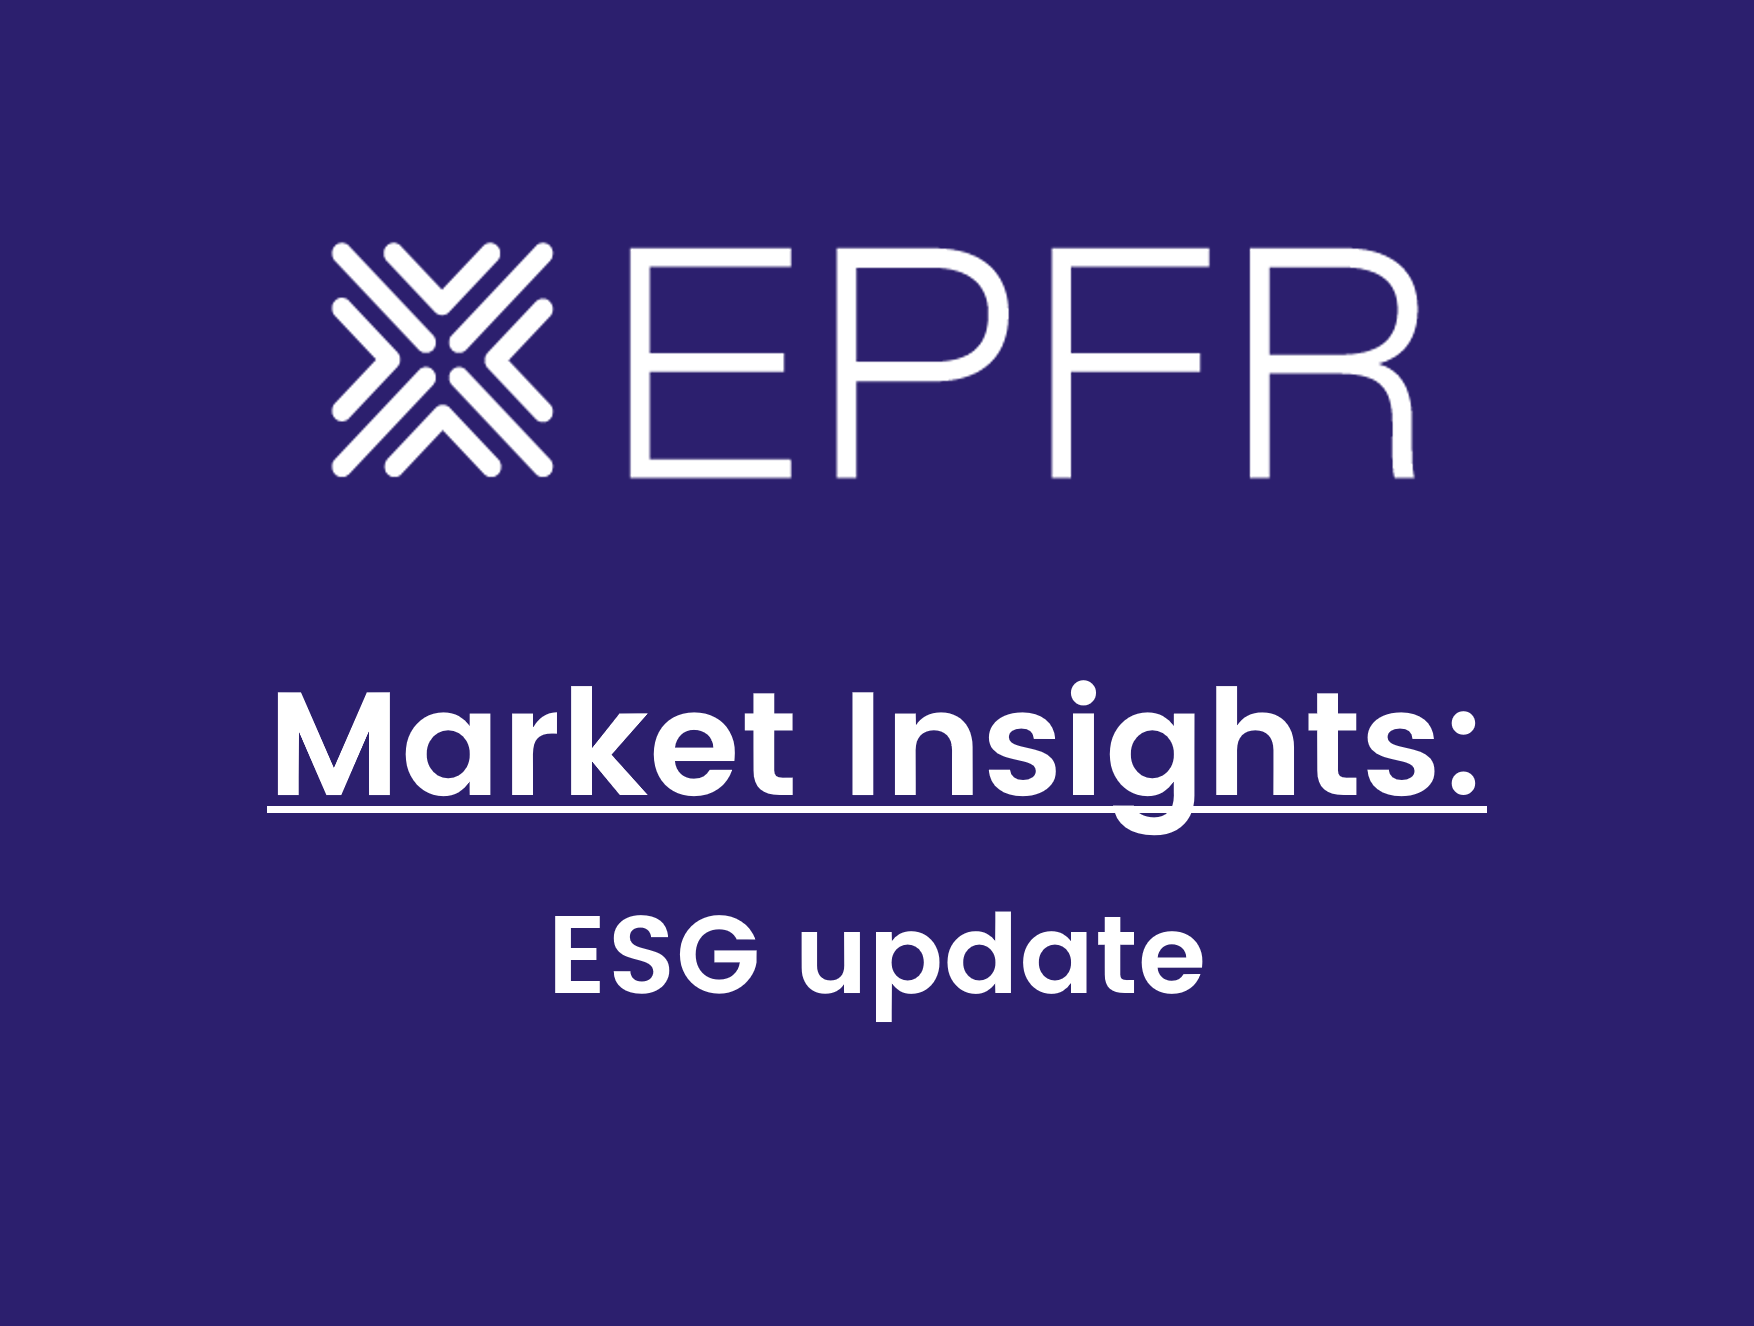 Image reading "Market Insights: ESG Update"